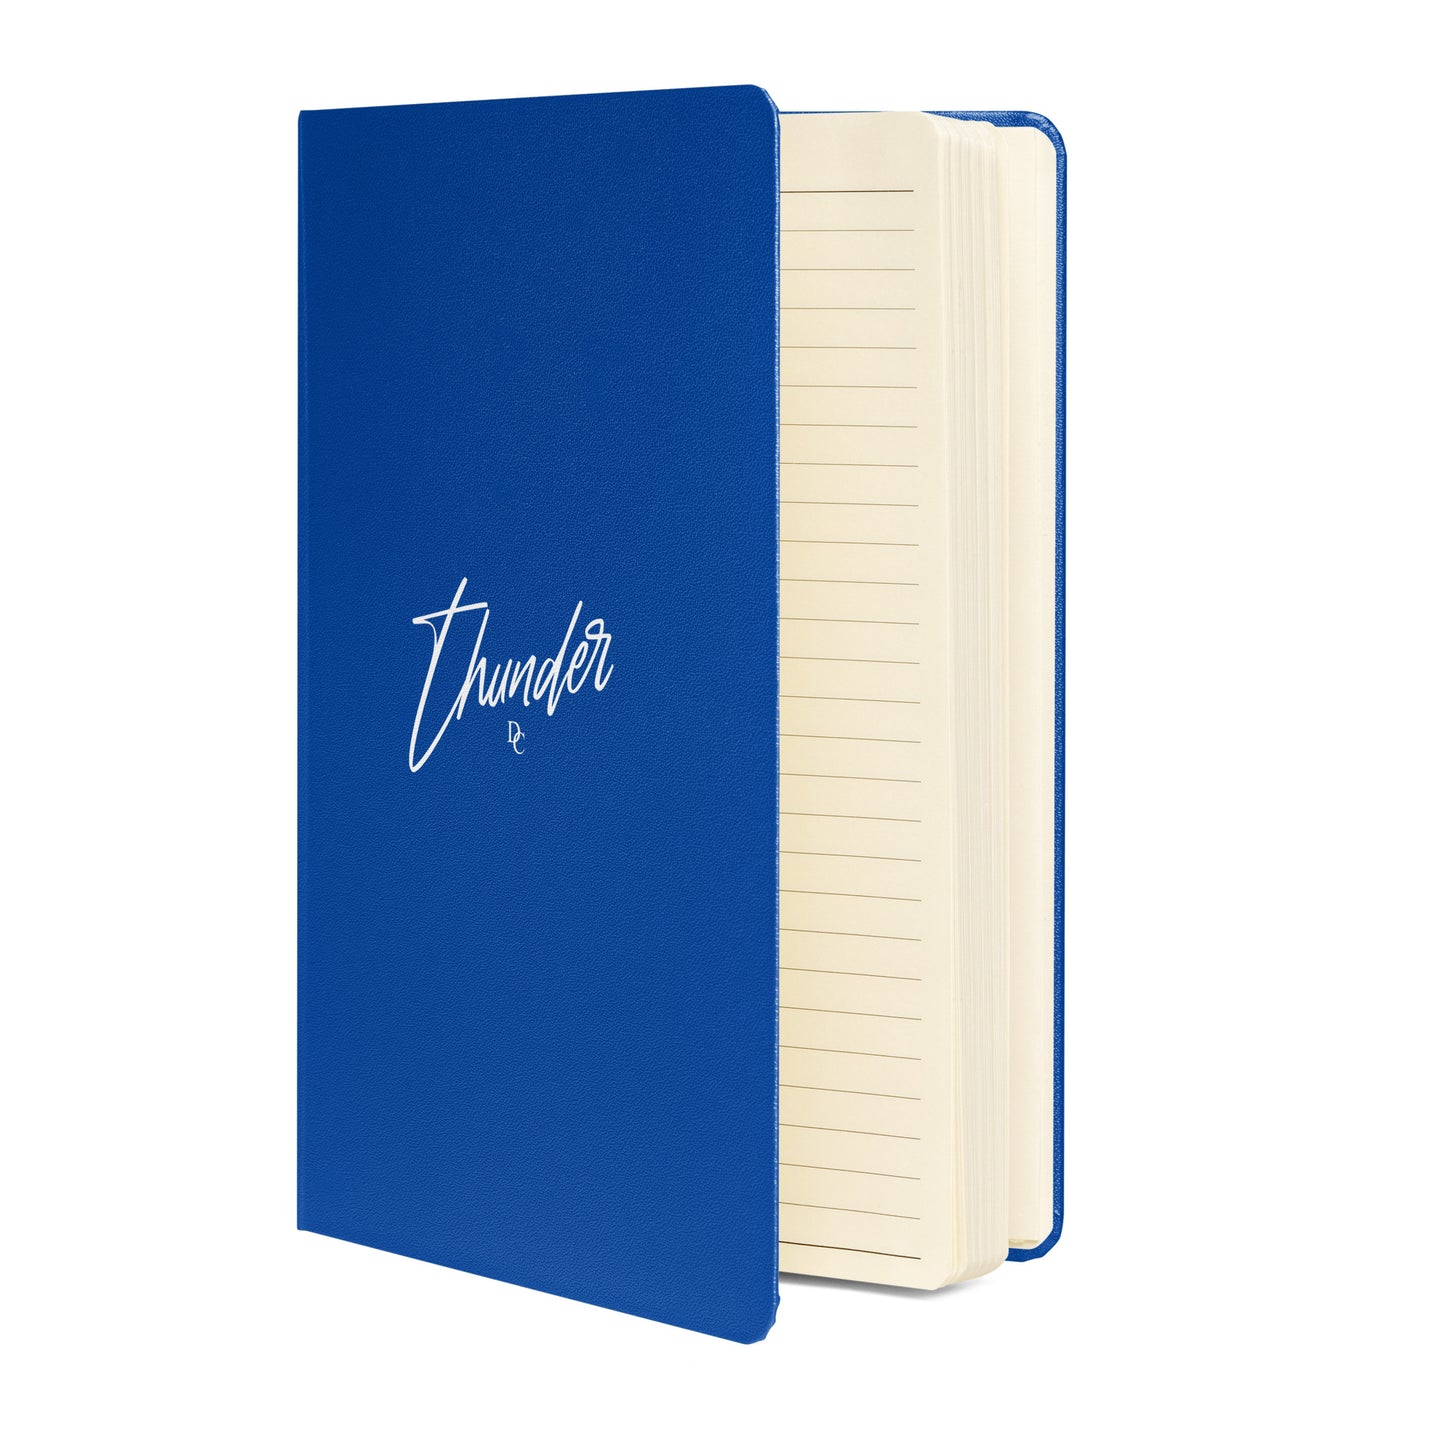 Thunder Script - Hardcover bound notebook